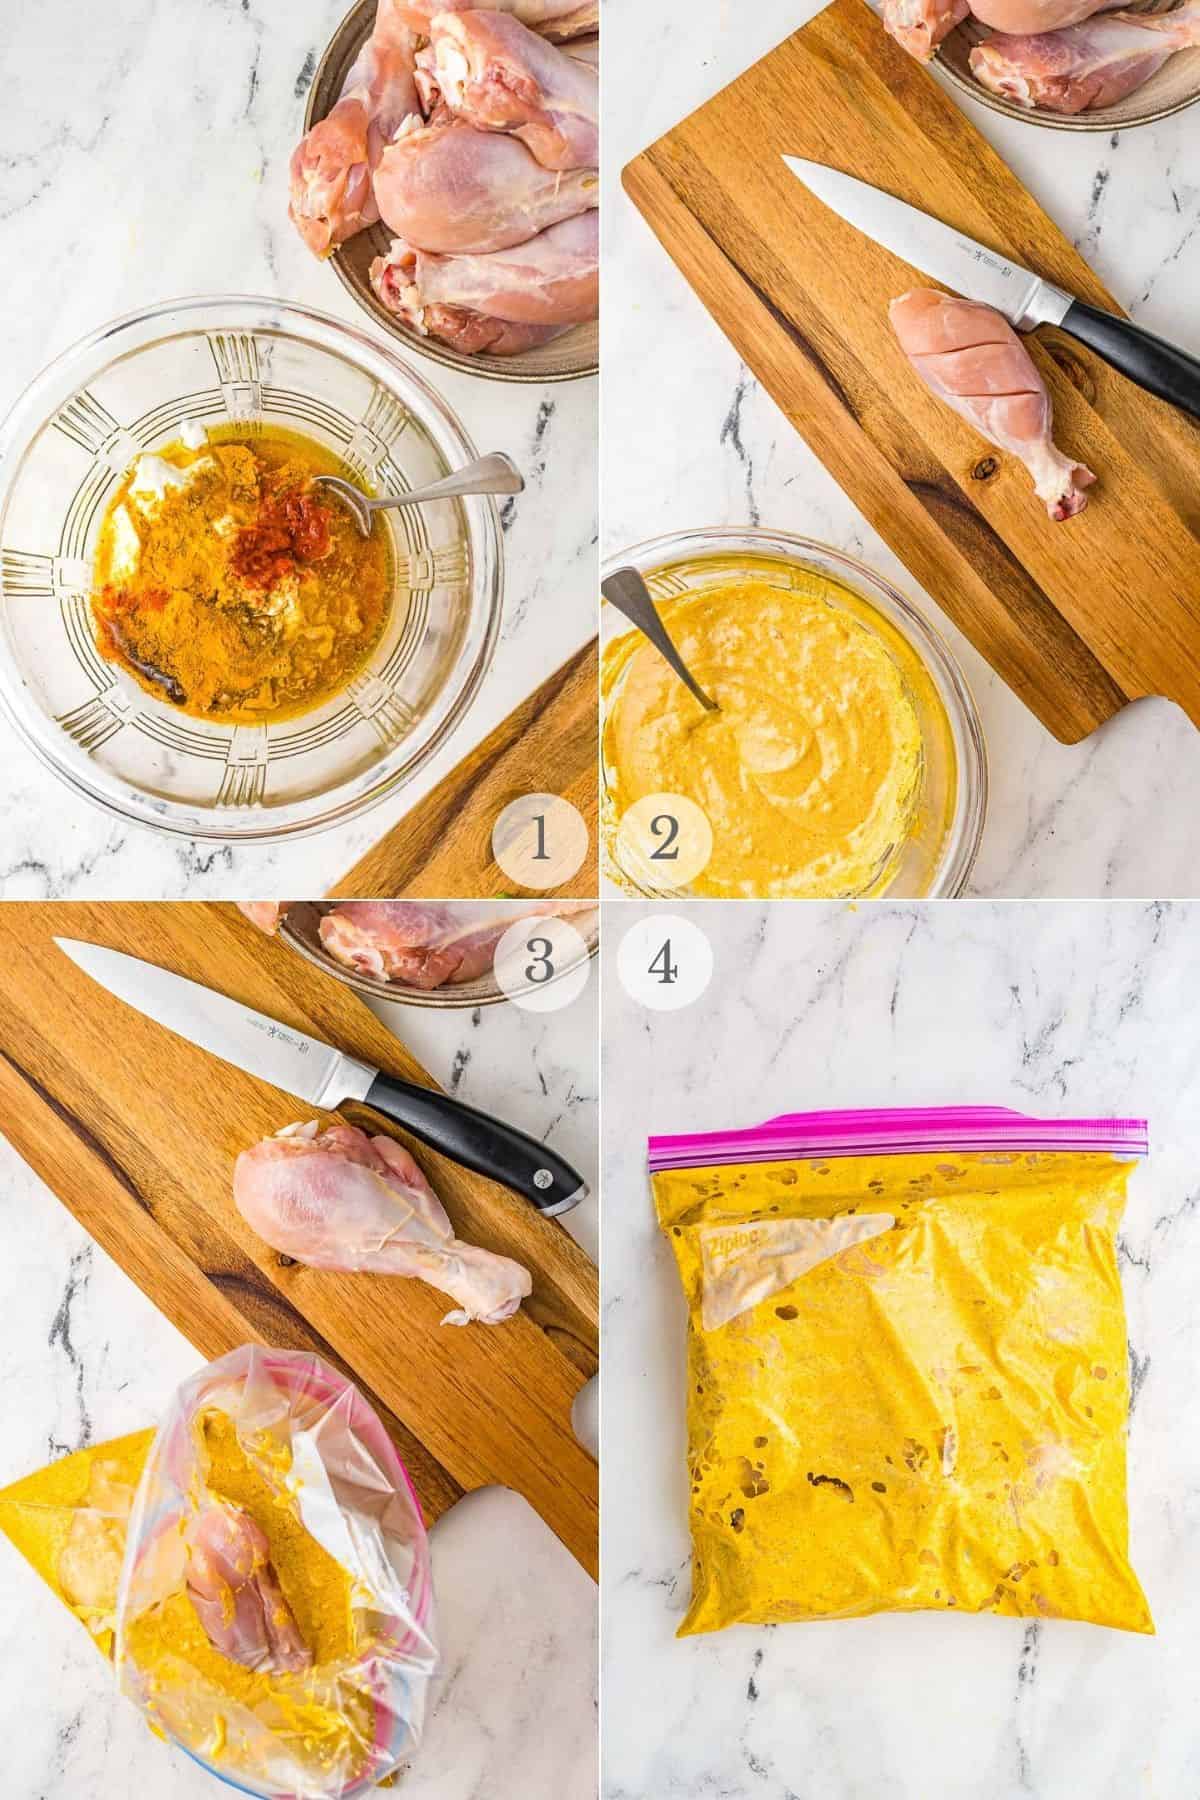 tandoori chicken recipe steps 1-4